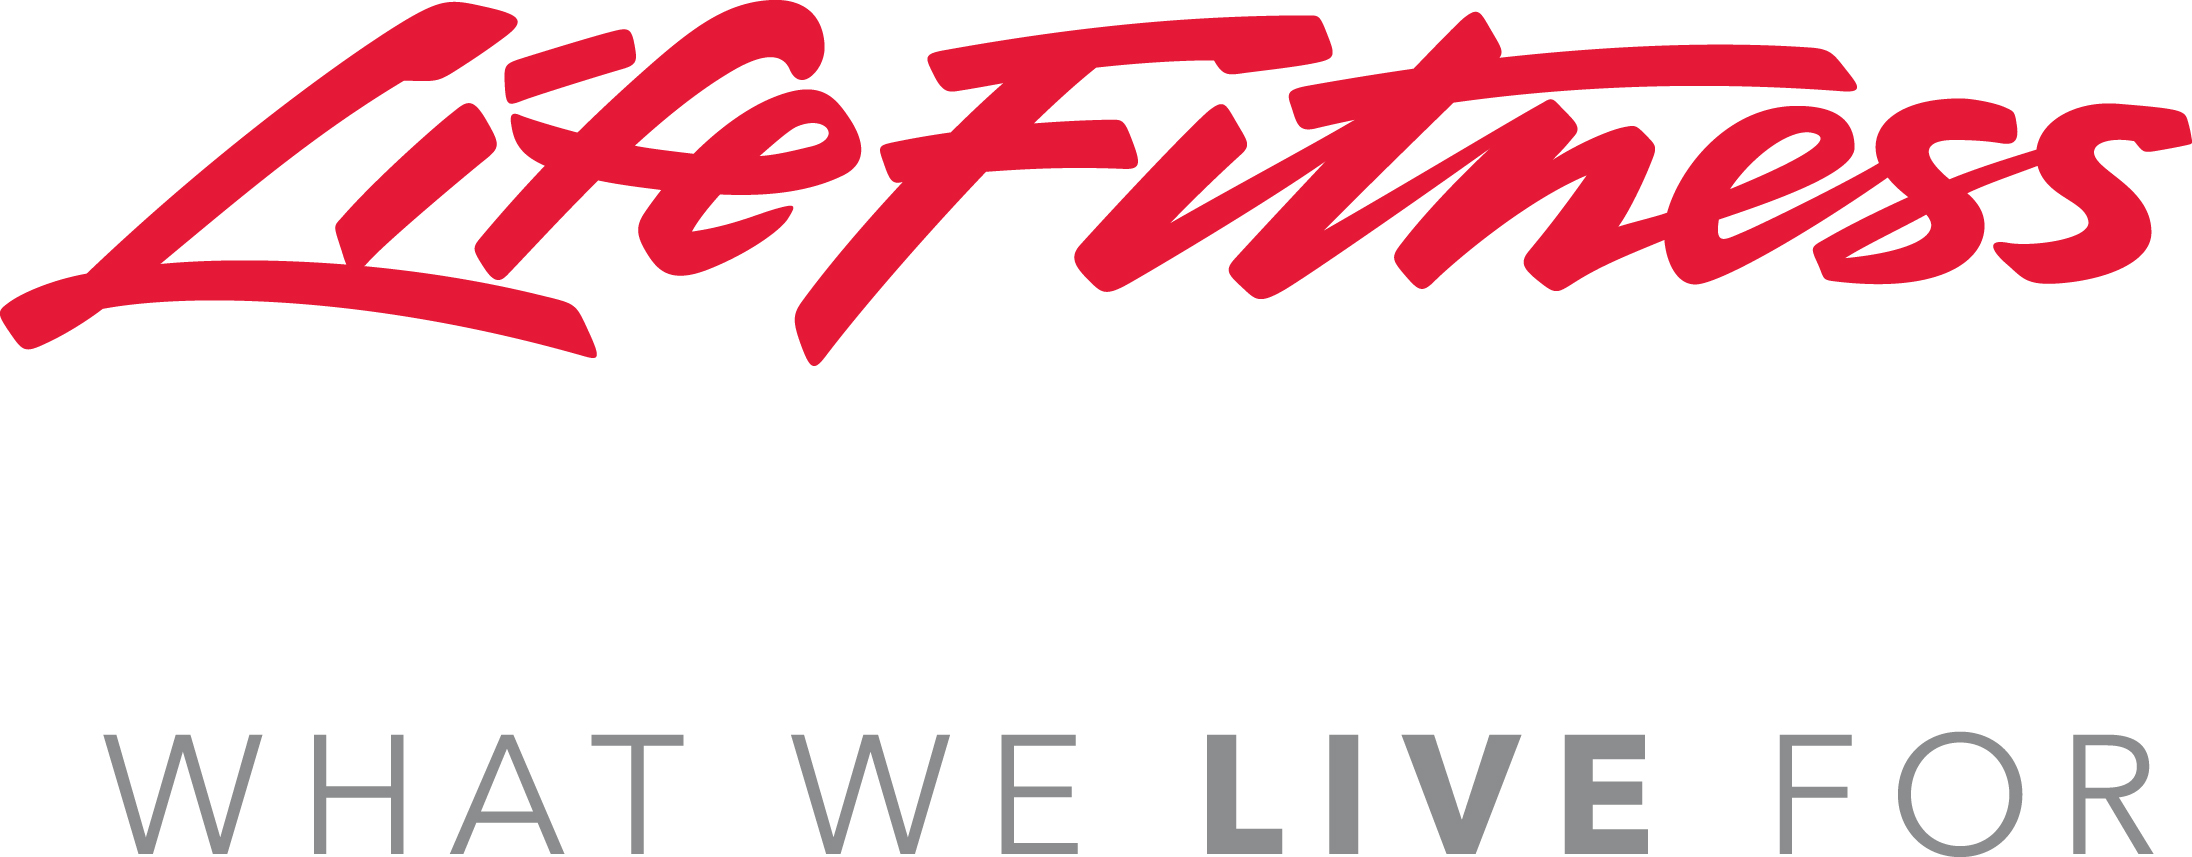 Life Fitness Logos